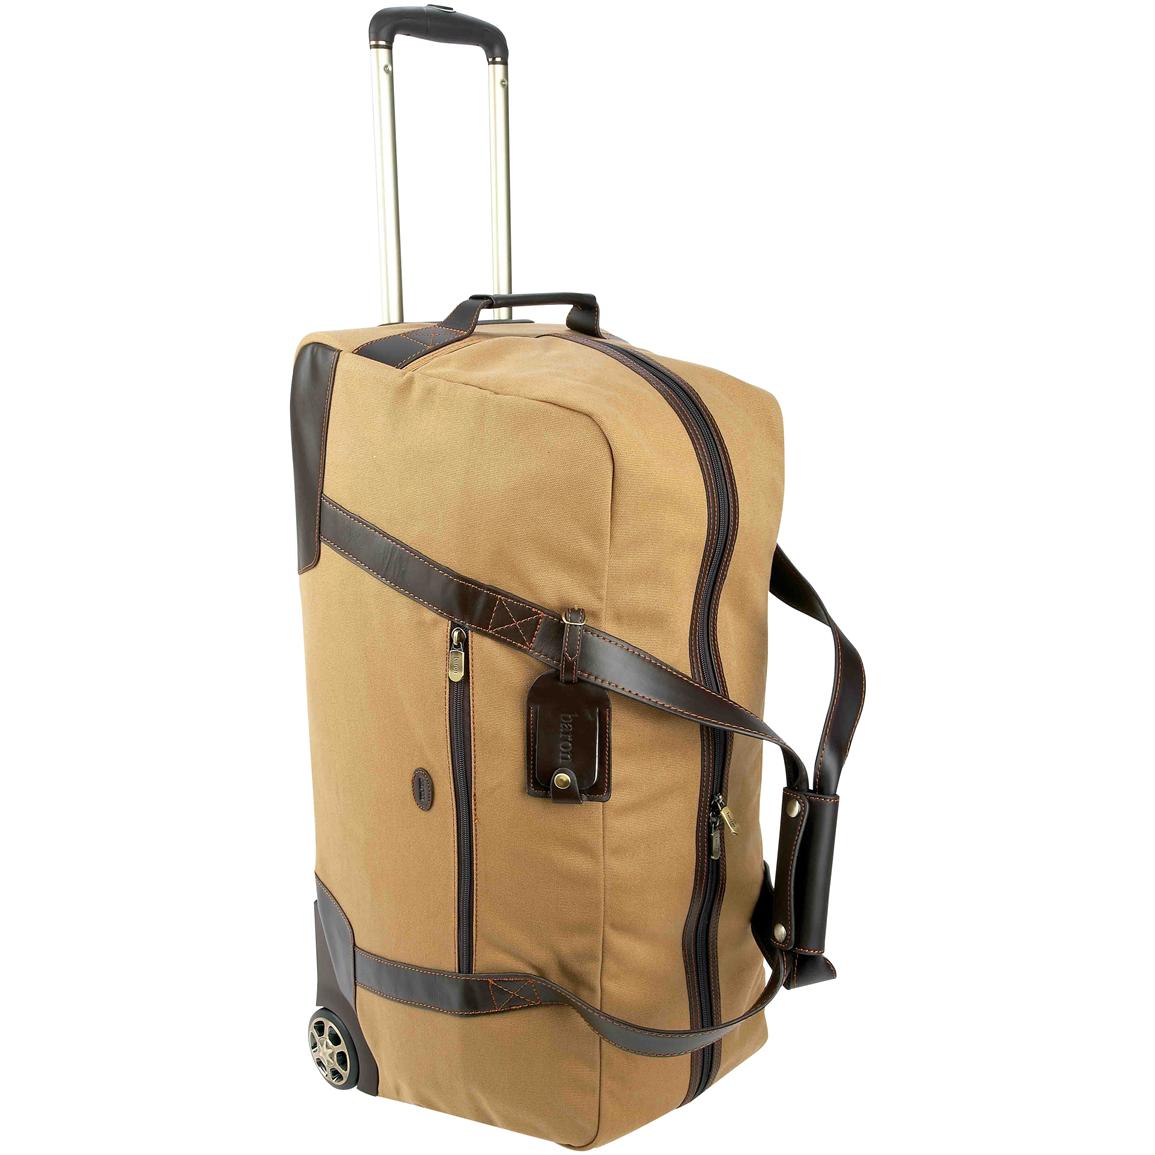 Monogrammed Duffle Bags With Wheels | semashow.com